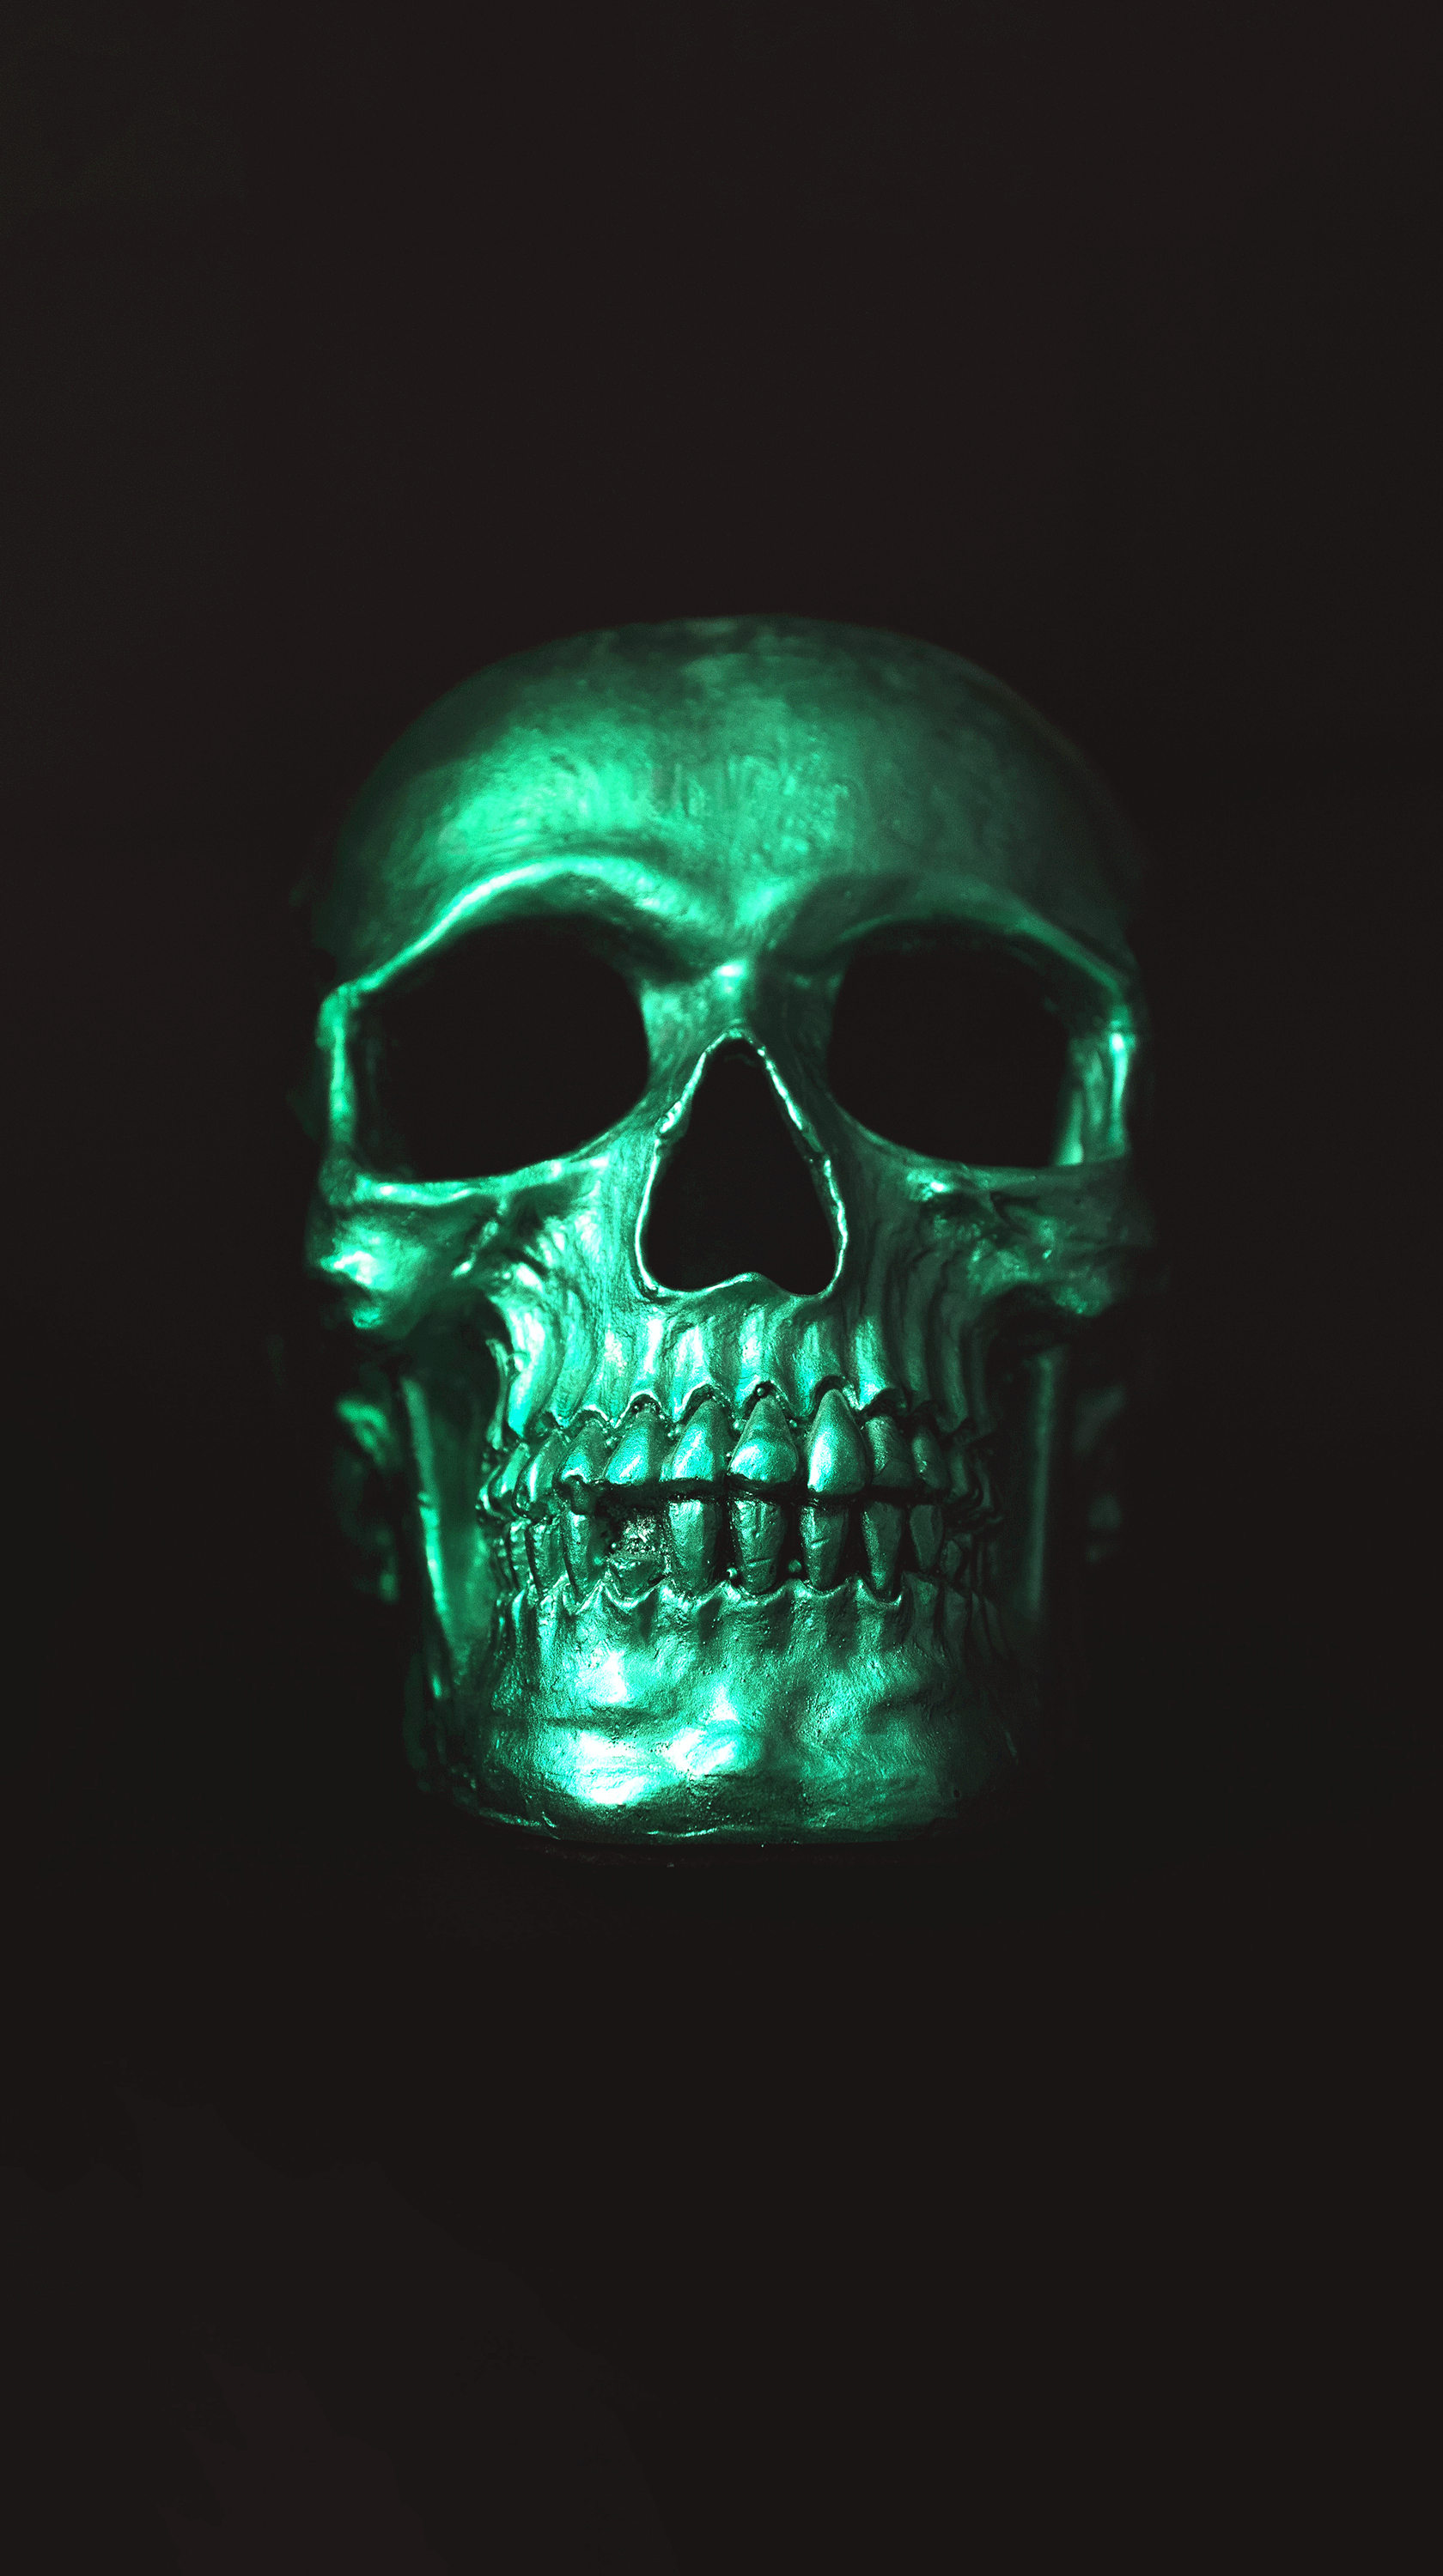 General 1680x3000 skull black background simple background digital art